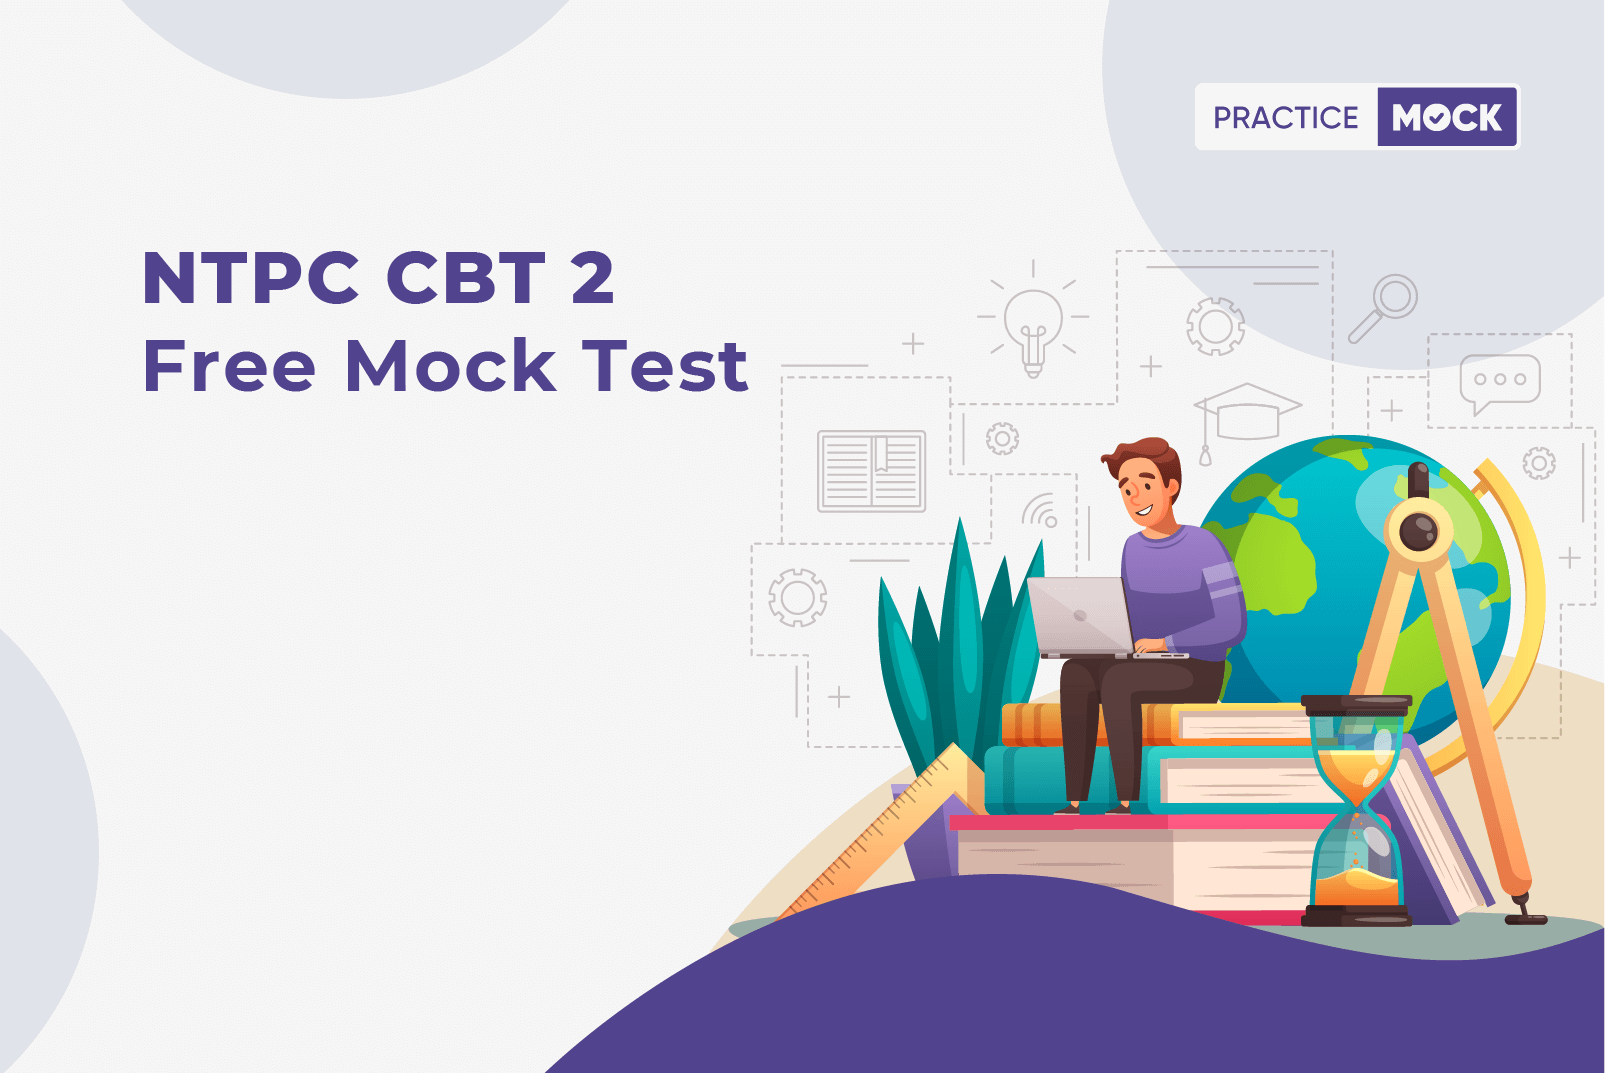 NTPC CBT 2 Free Mock Test